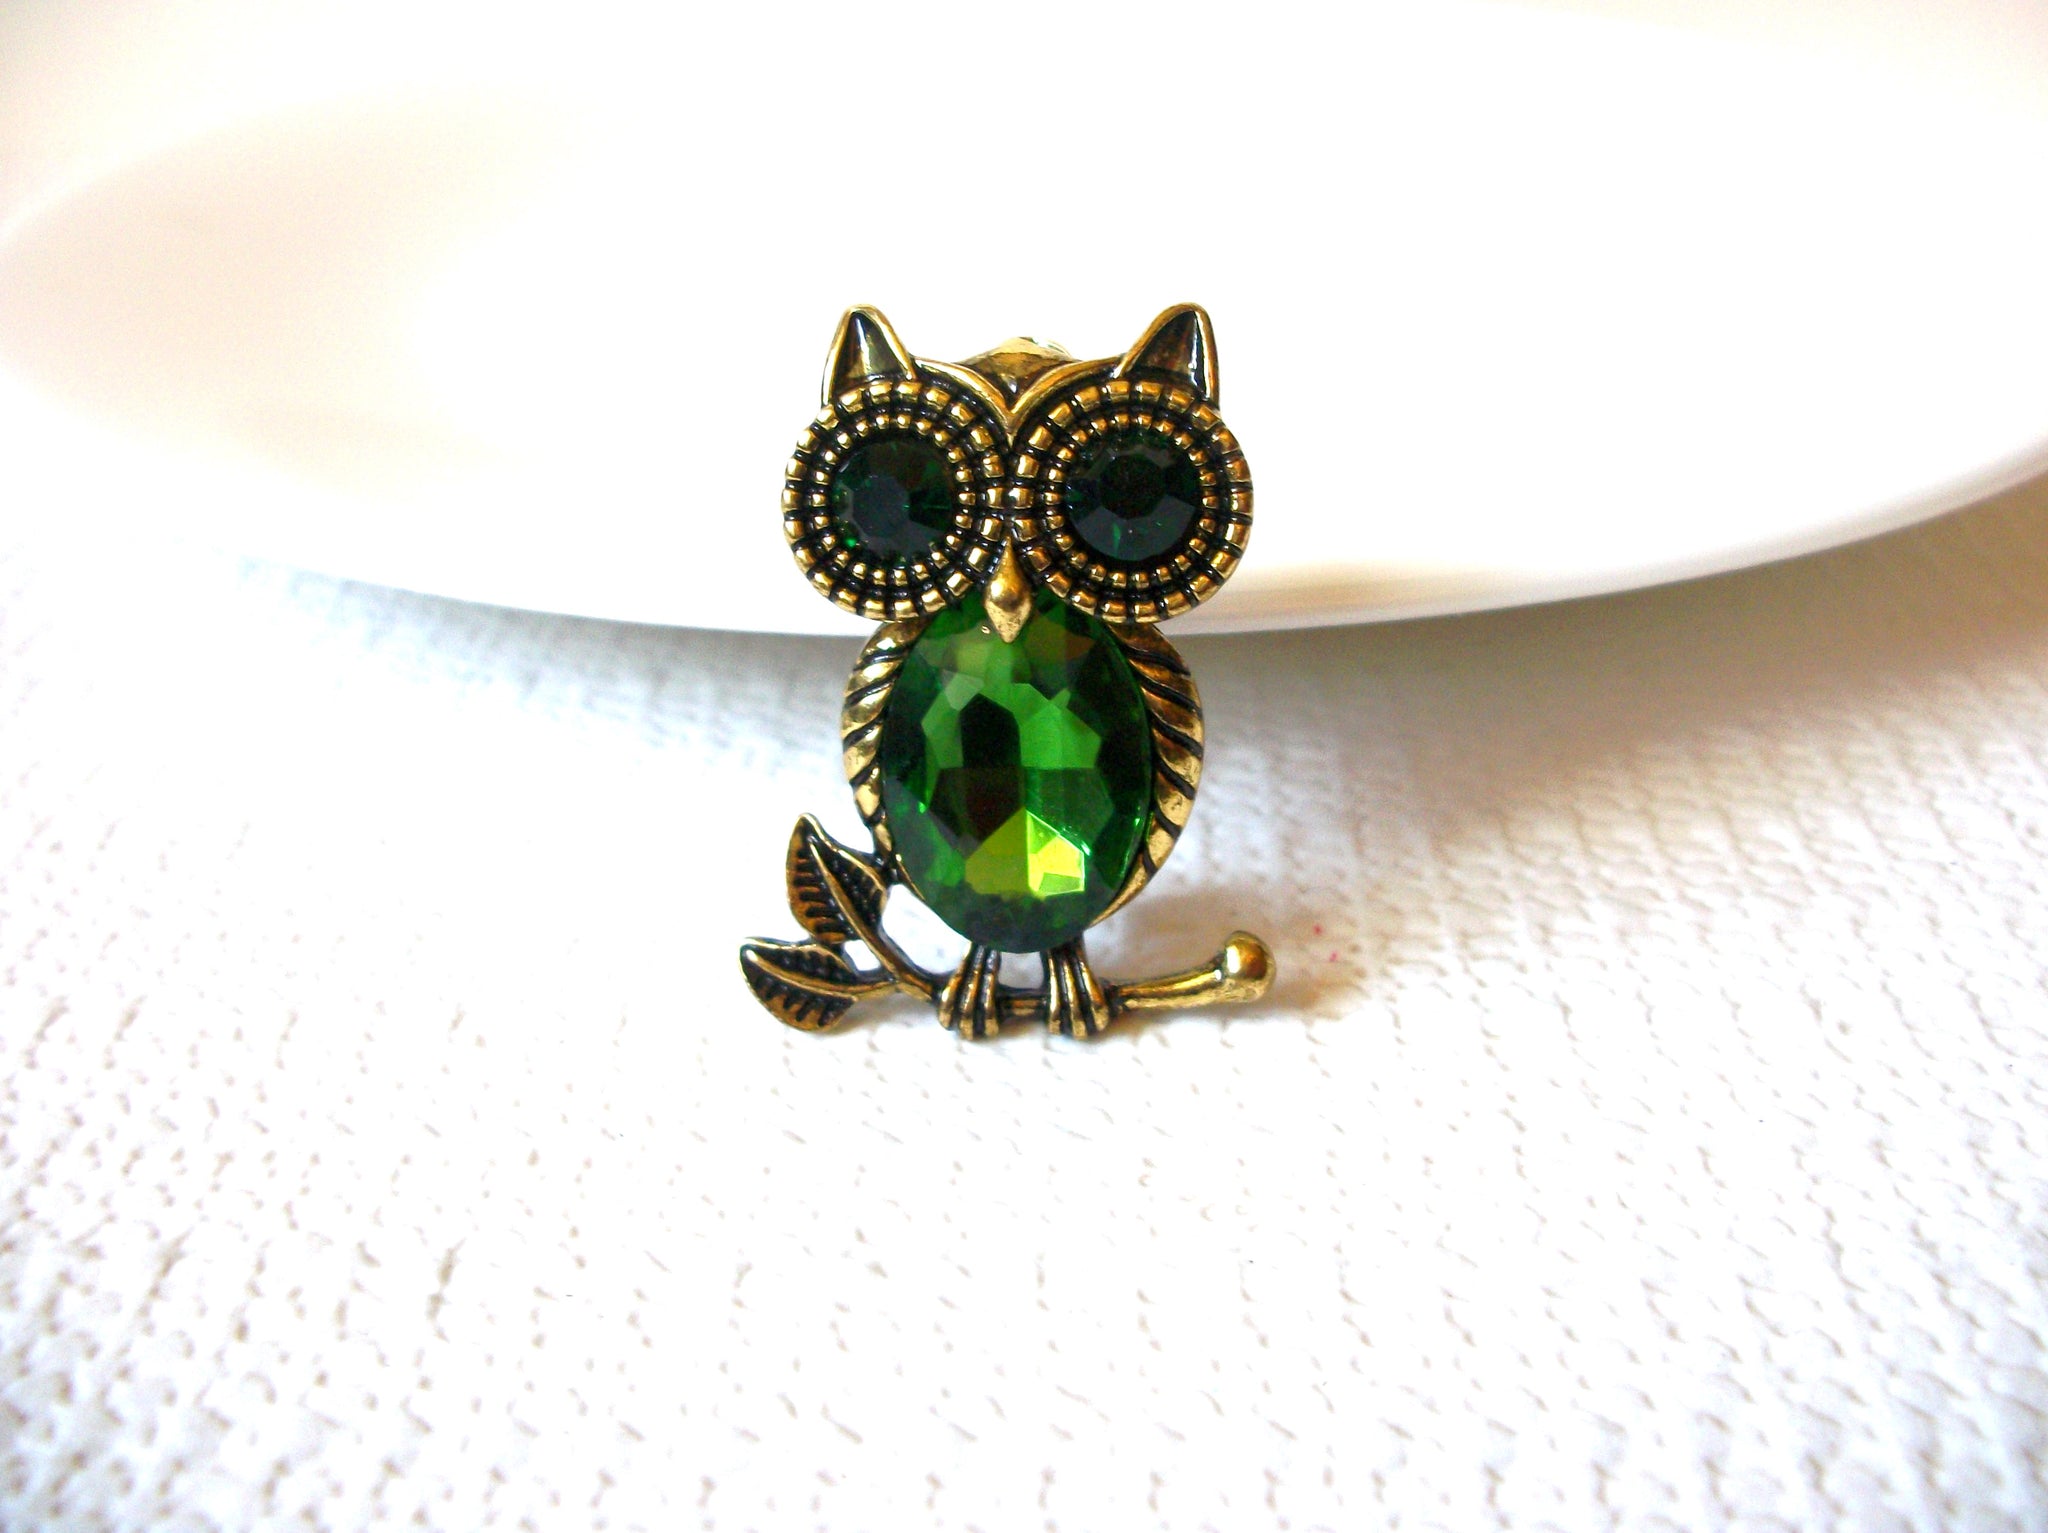 Retro Big Eyes Owl Pin Brooch 80220